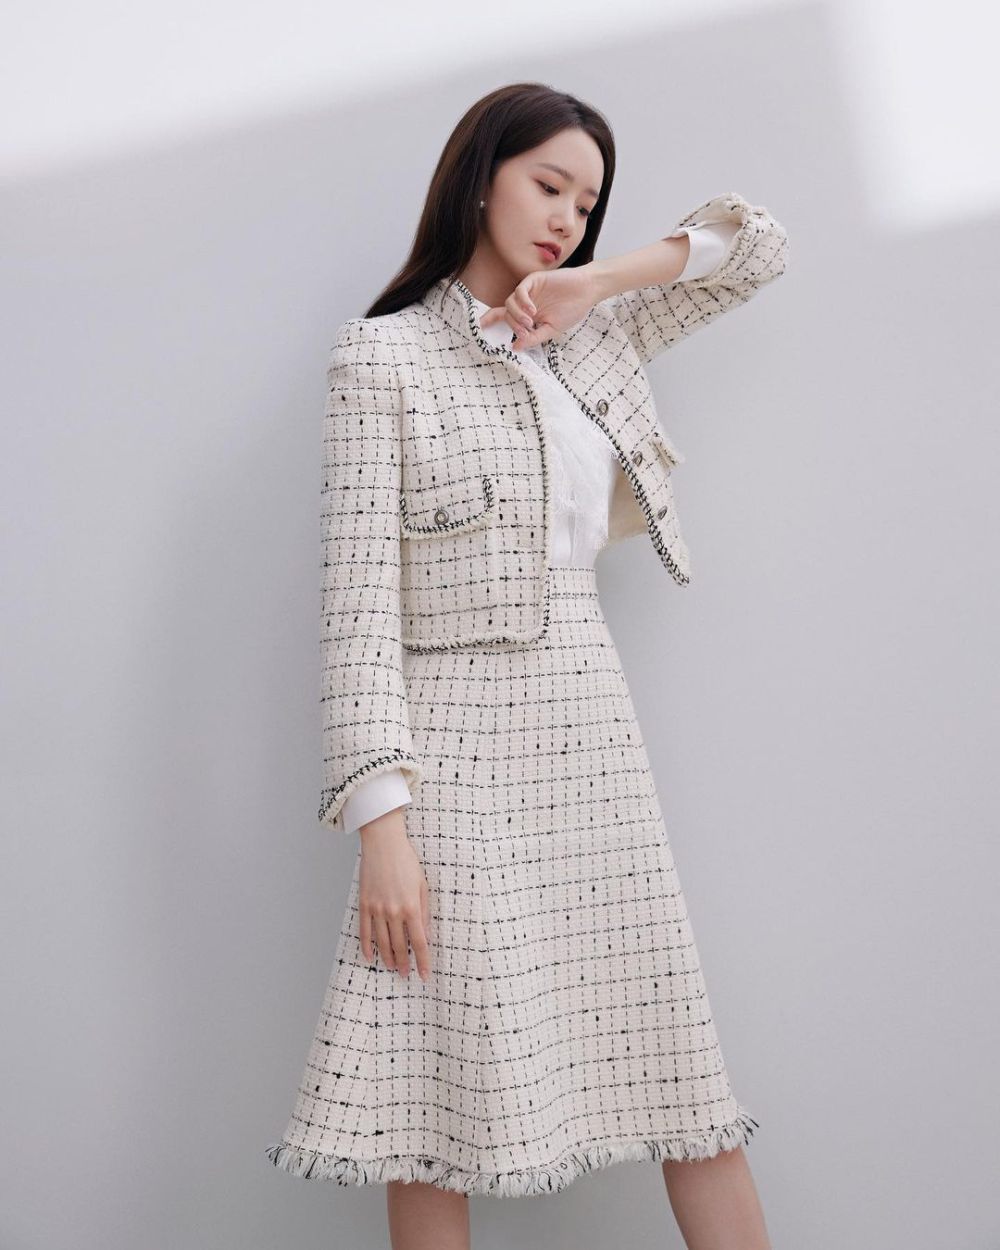 7 Inspirasi One Set Outfit ala Yoona SNSD, Vibesnya Old Money